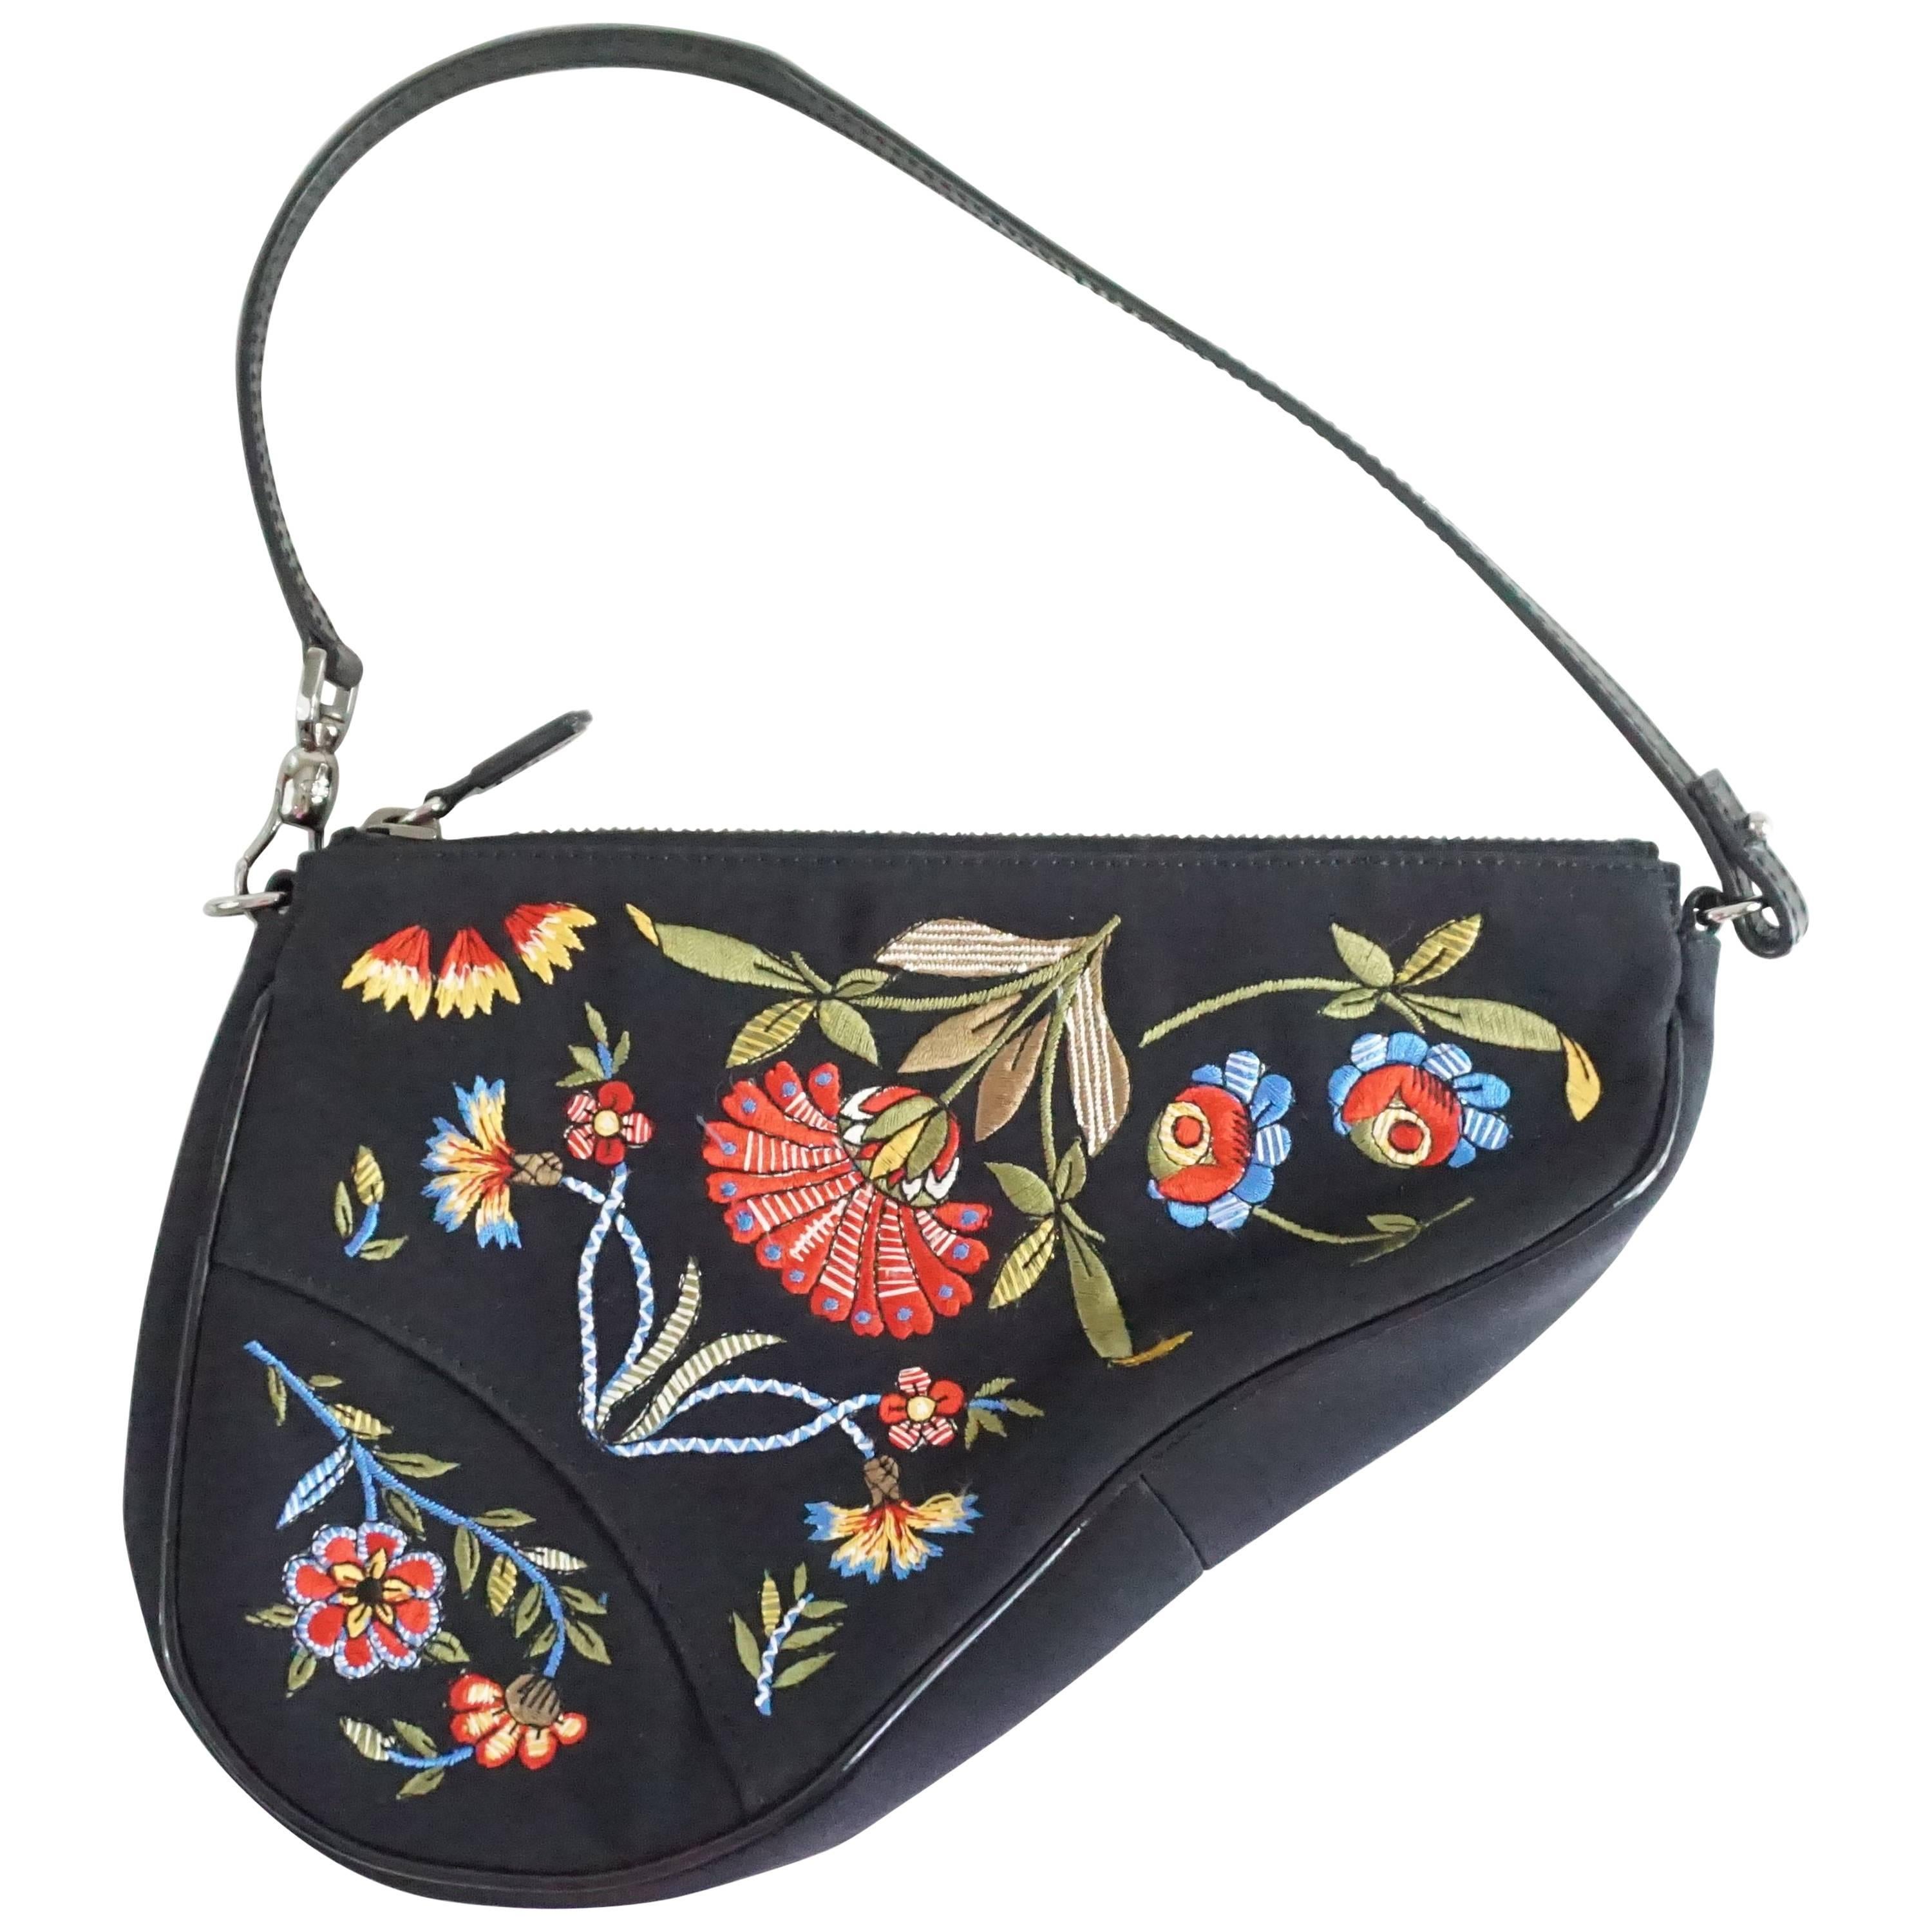 Christian Dior Black and Multi Floral Embroidered Saddle Bag - SHW